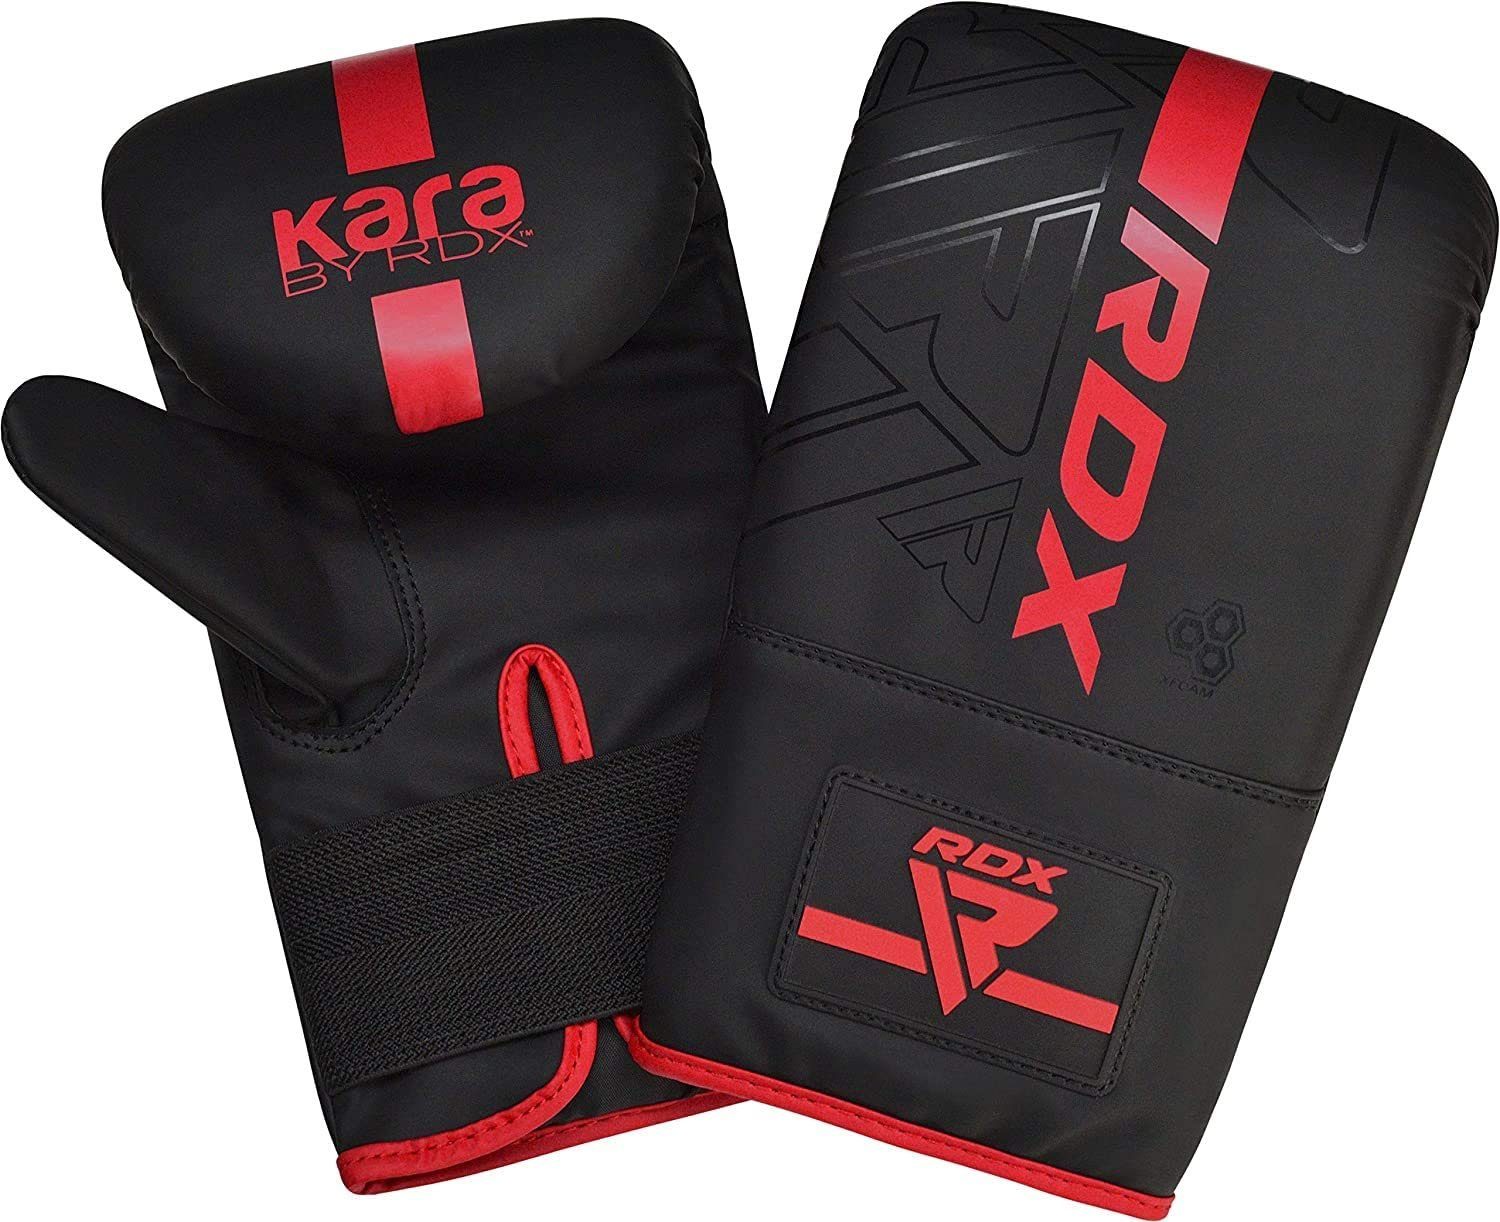 Sandsackhandschuhe RDX Boxsackhandschuhe für Boxen Martial Sports Sparring, Arts, RED RDX